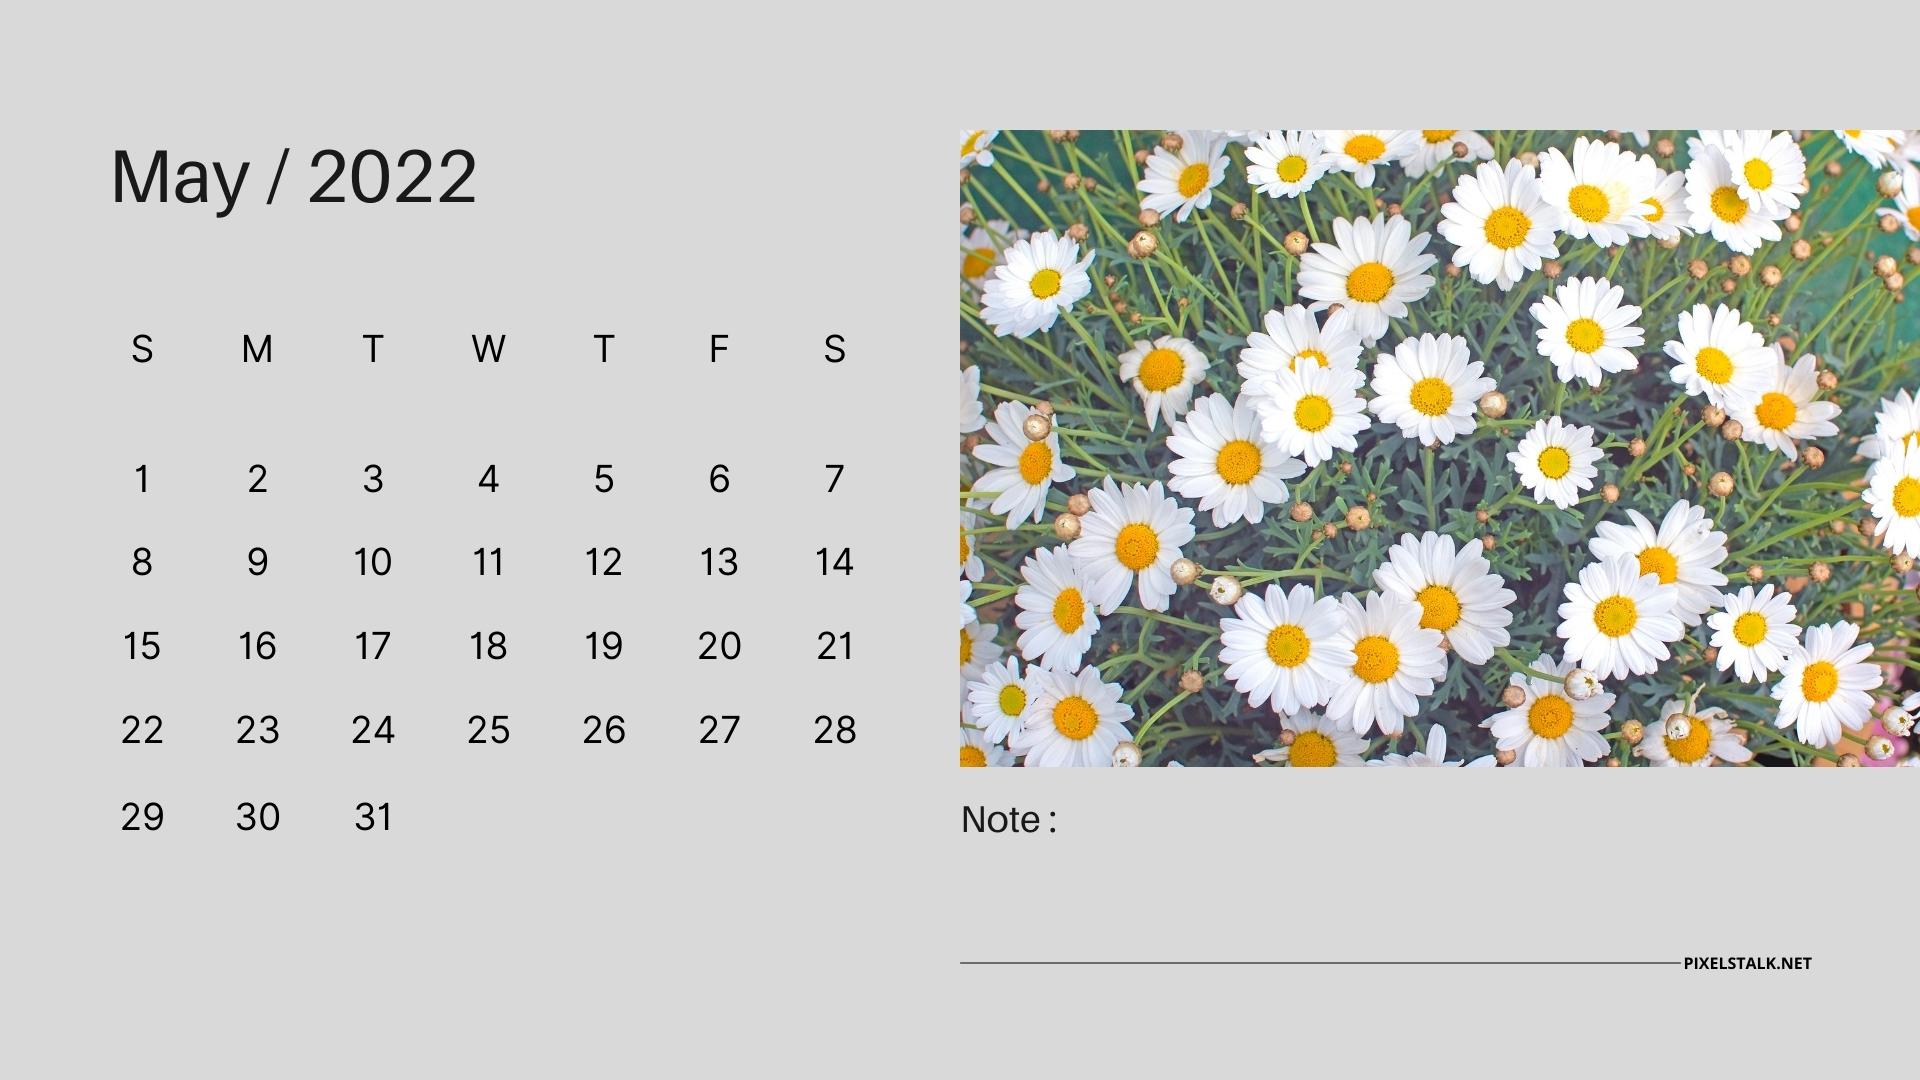 May 2022 Calendar Wallpaper May 2022 Calendar Desktop Wallpapers Hd - Pixelstalk.net